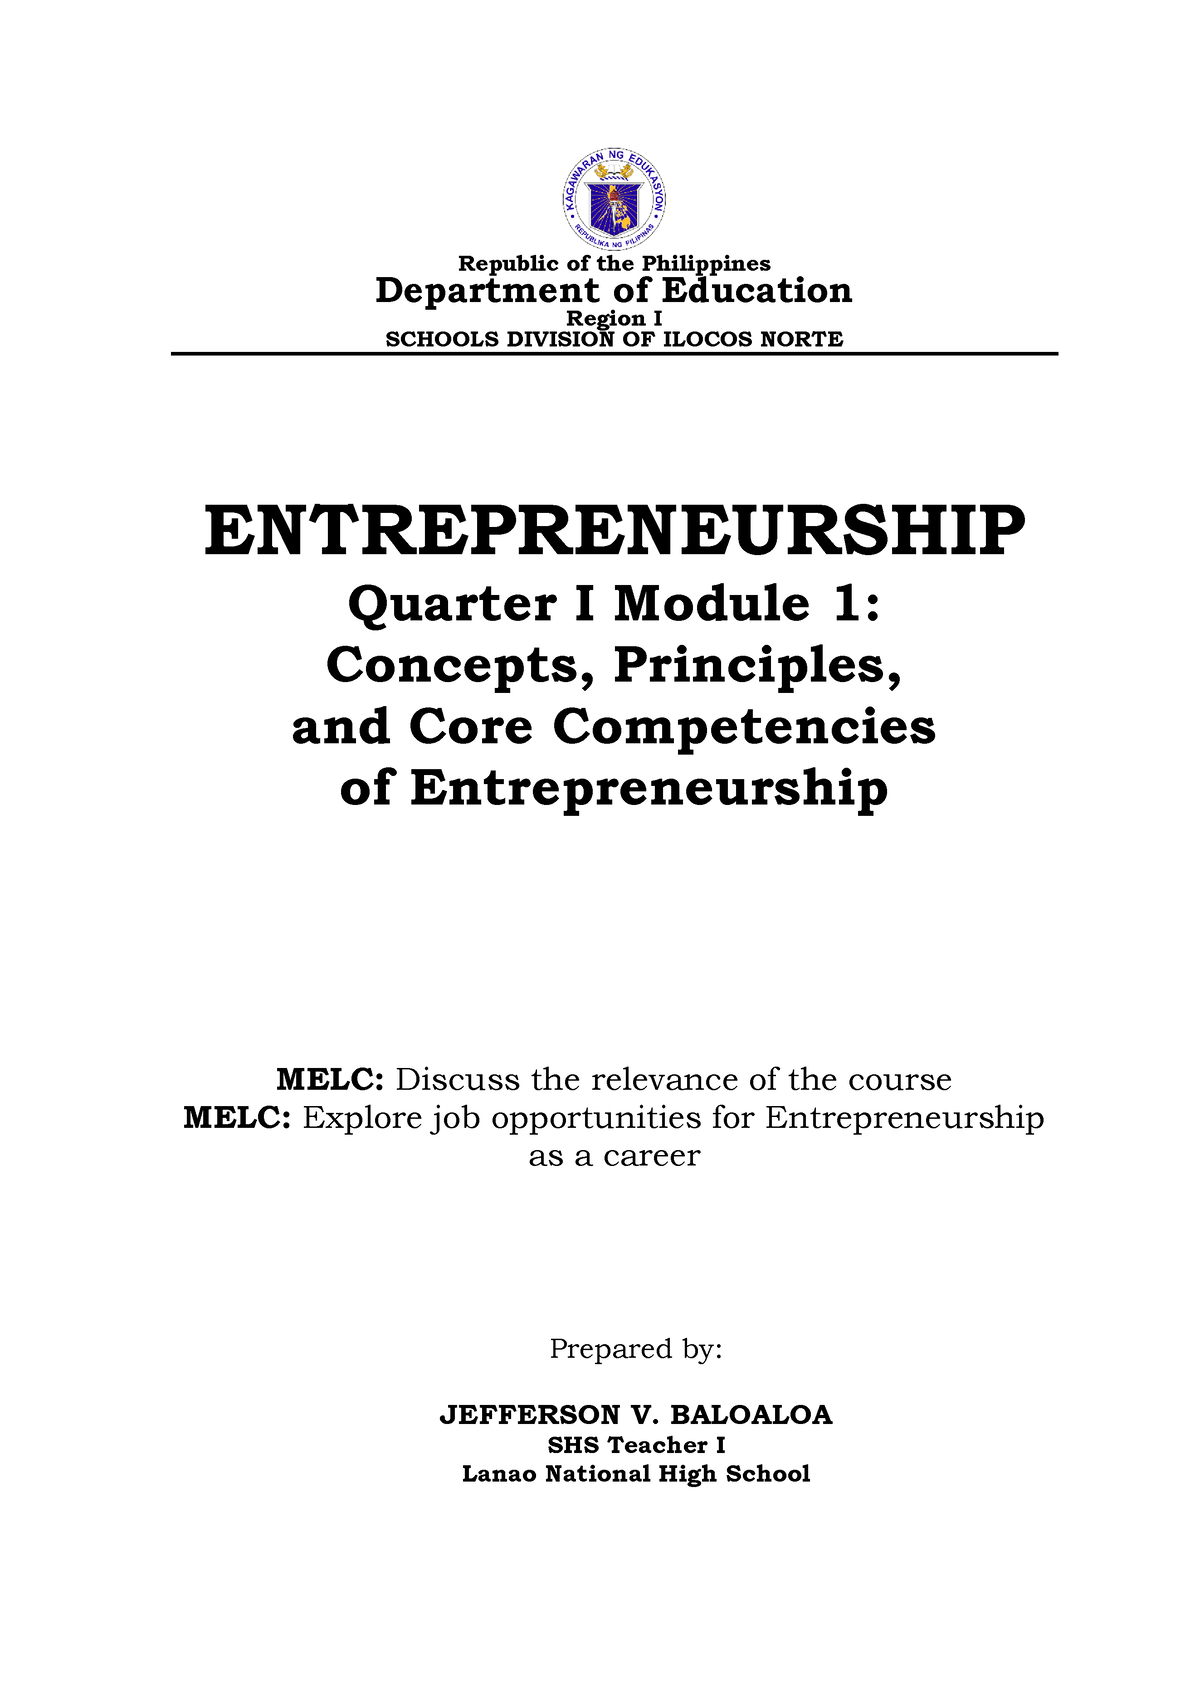 entrepreneurship assignment oum